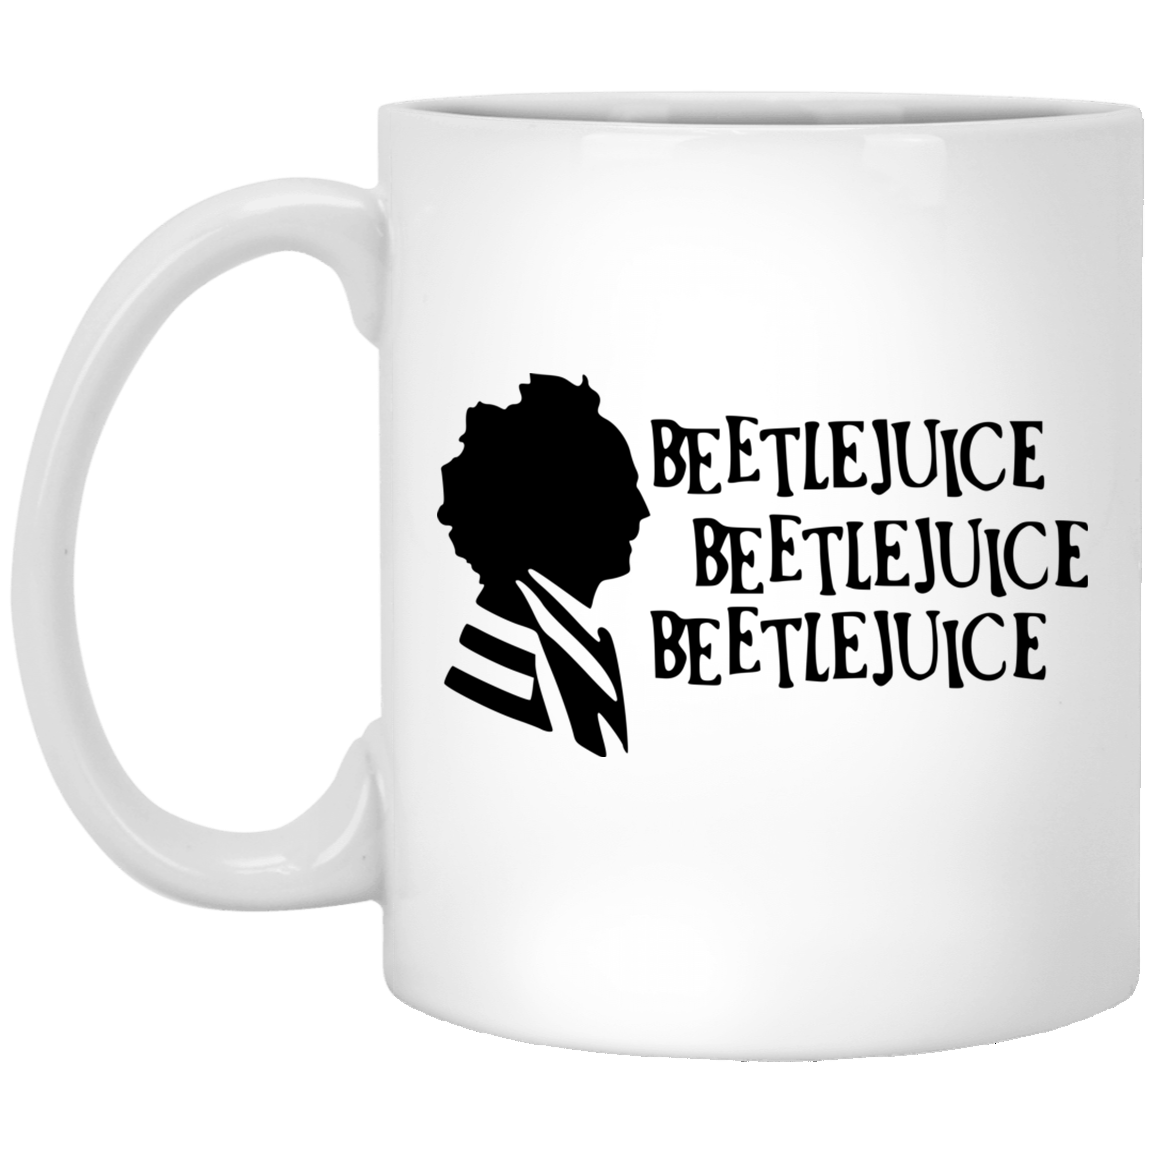 Beetlejuice 11 oz. White Mug